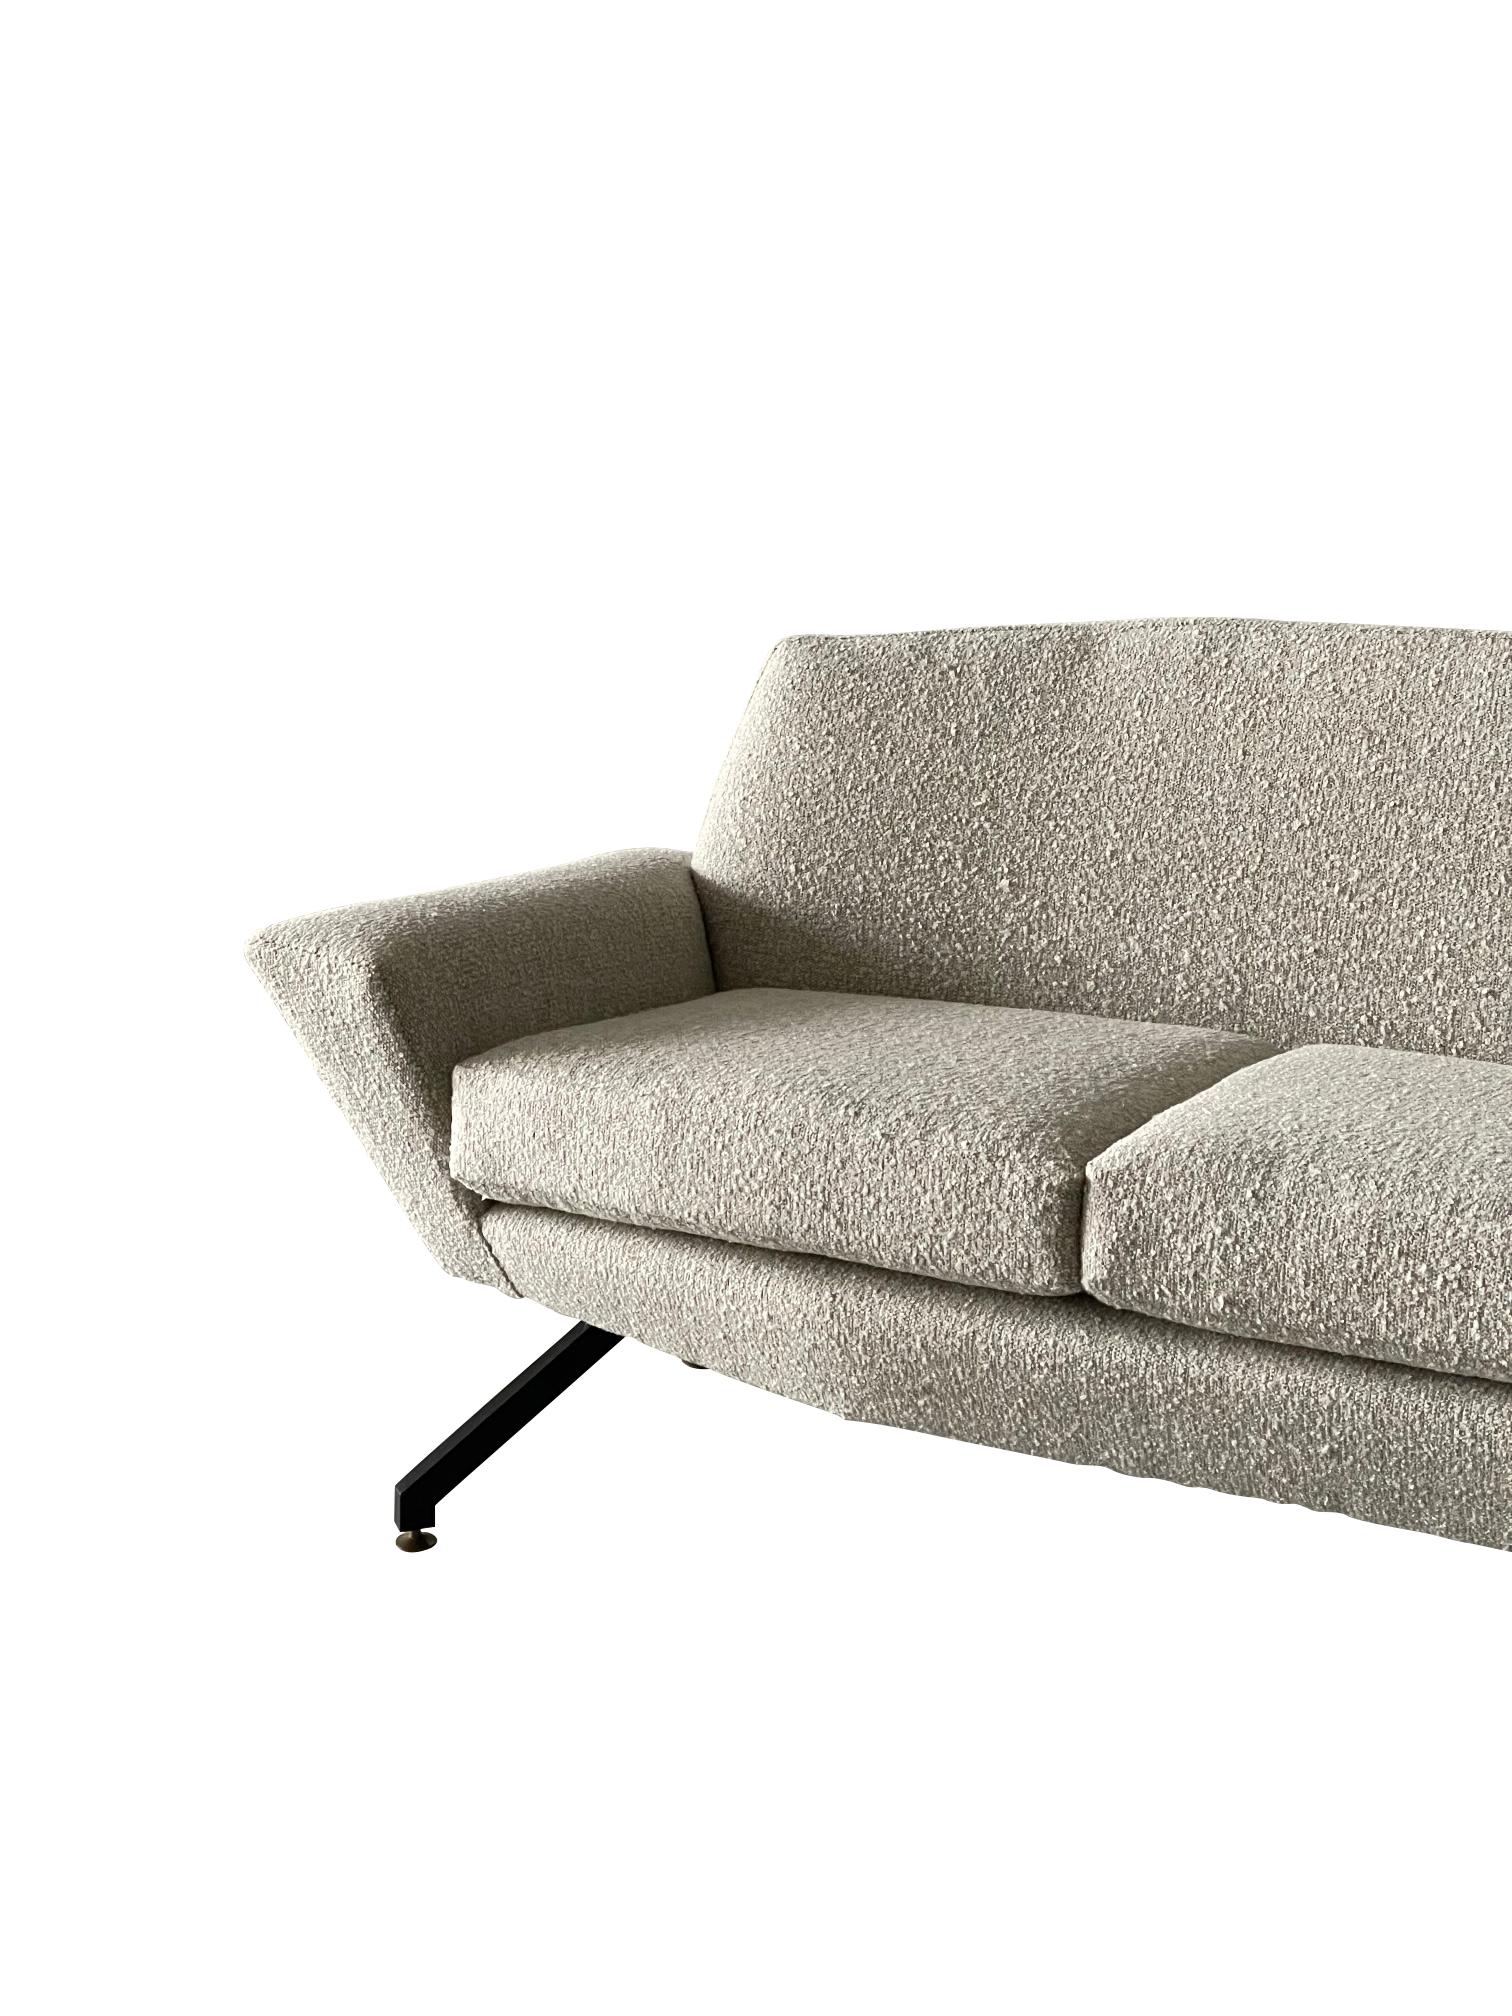 Italian Angular Upholstered Lenzi Sofa, Italy, 1950s